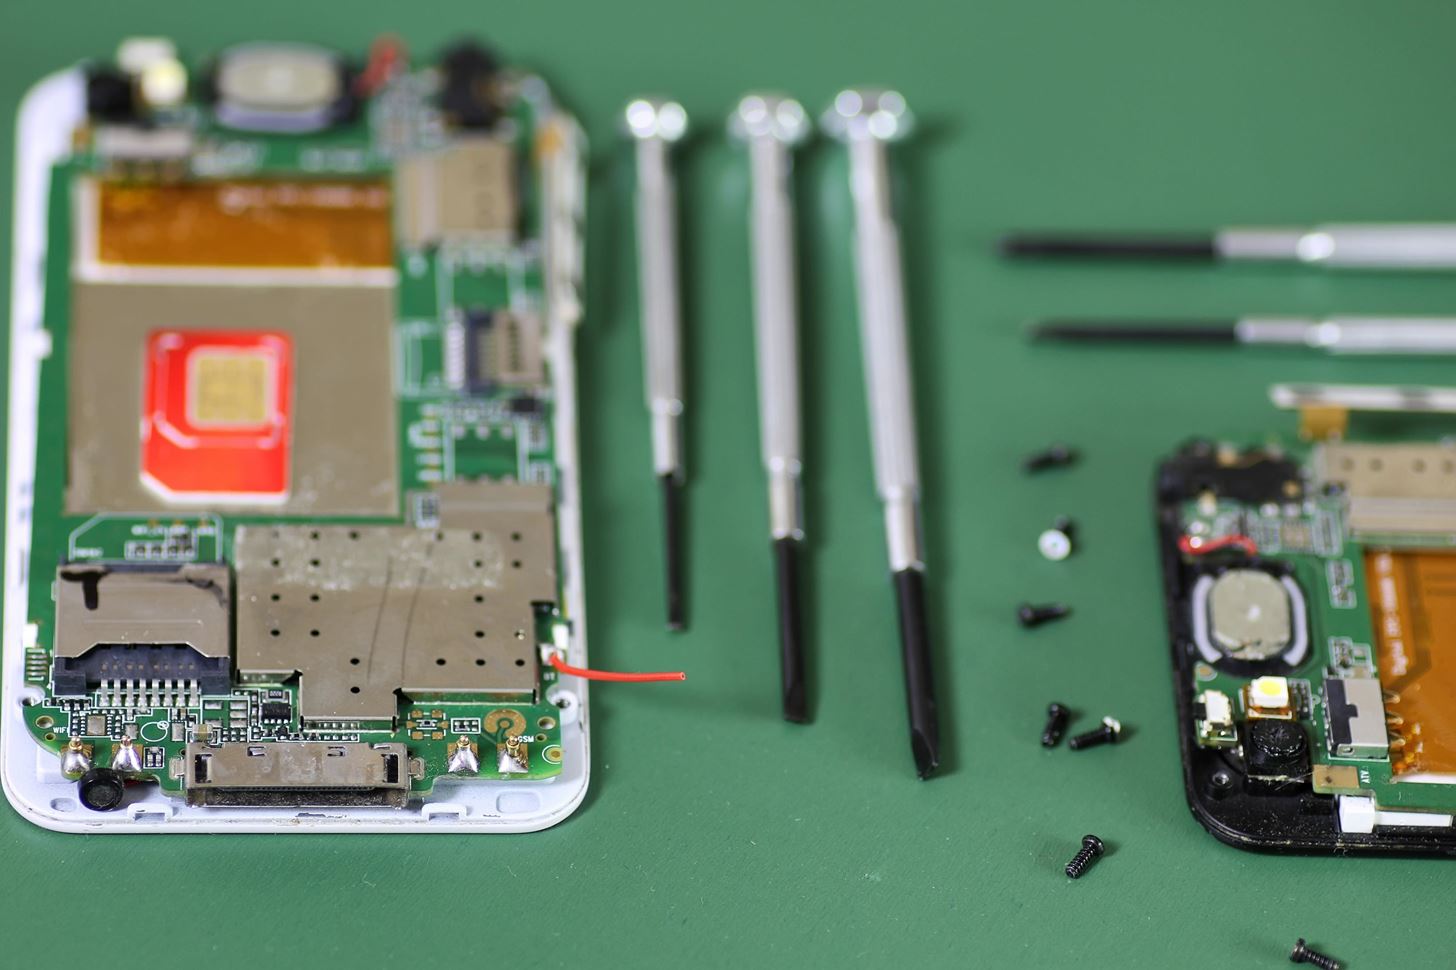 DIY Repair: How to Fix Your Broken Smartphone Like a Pro